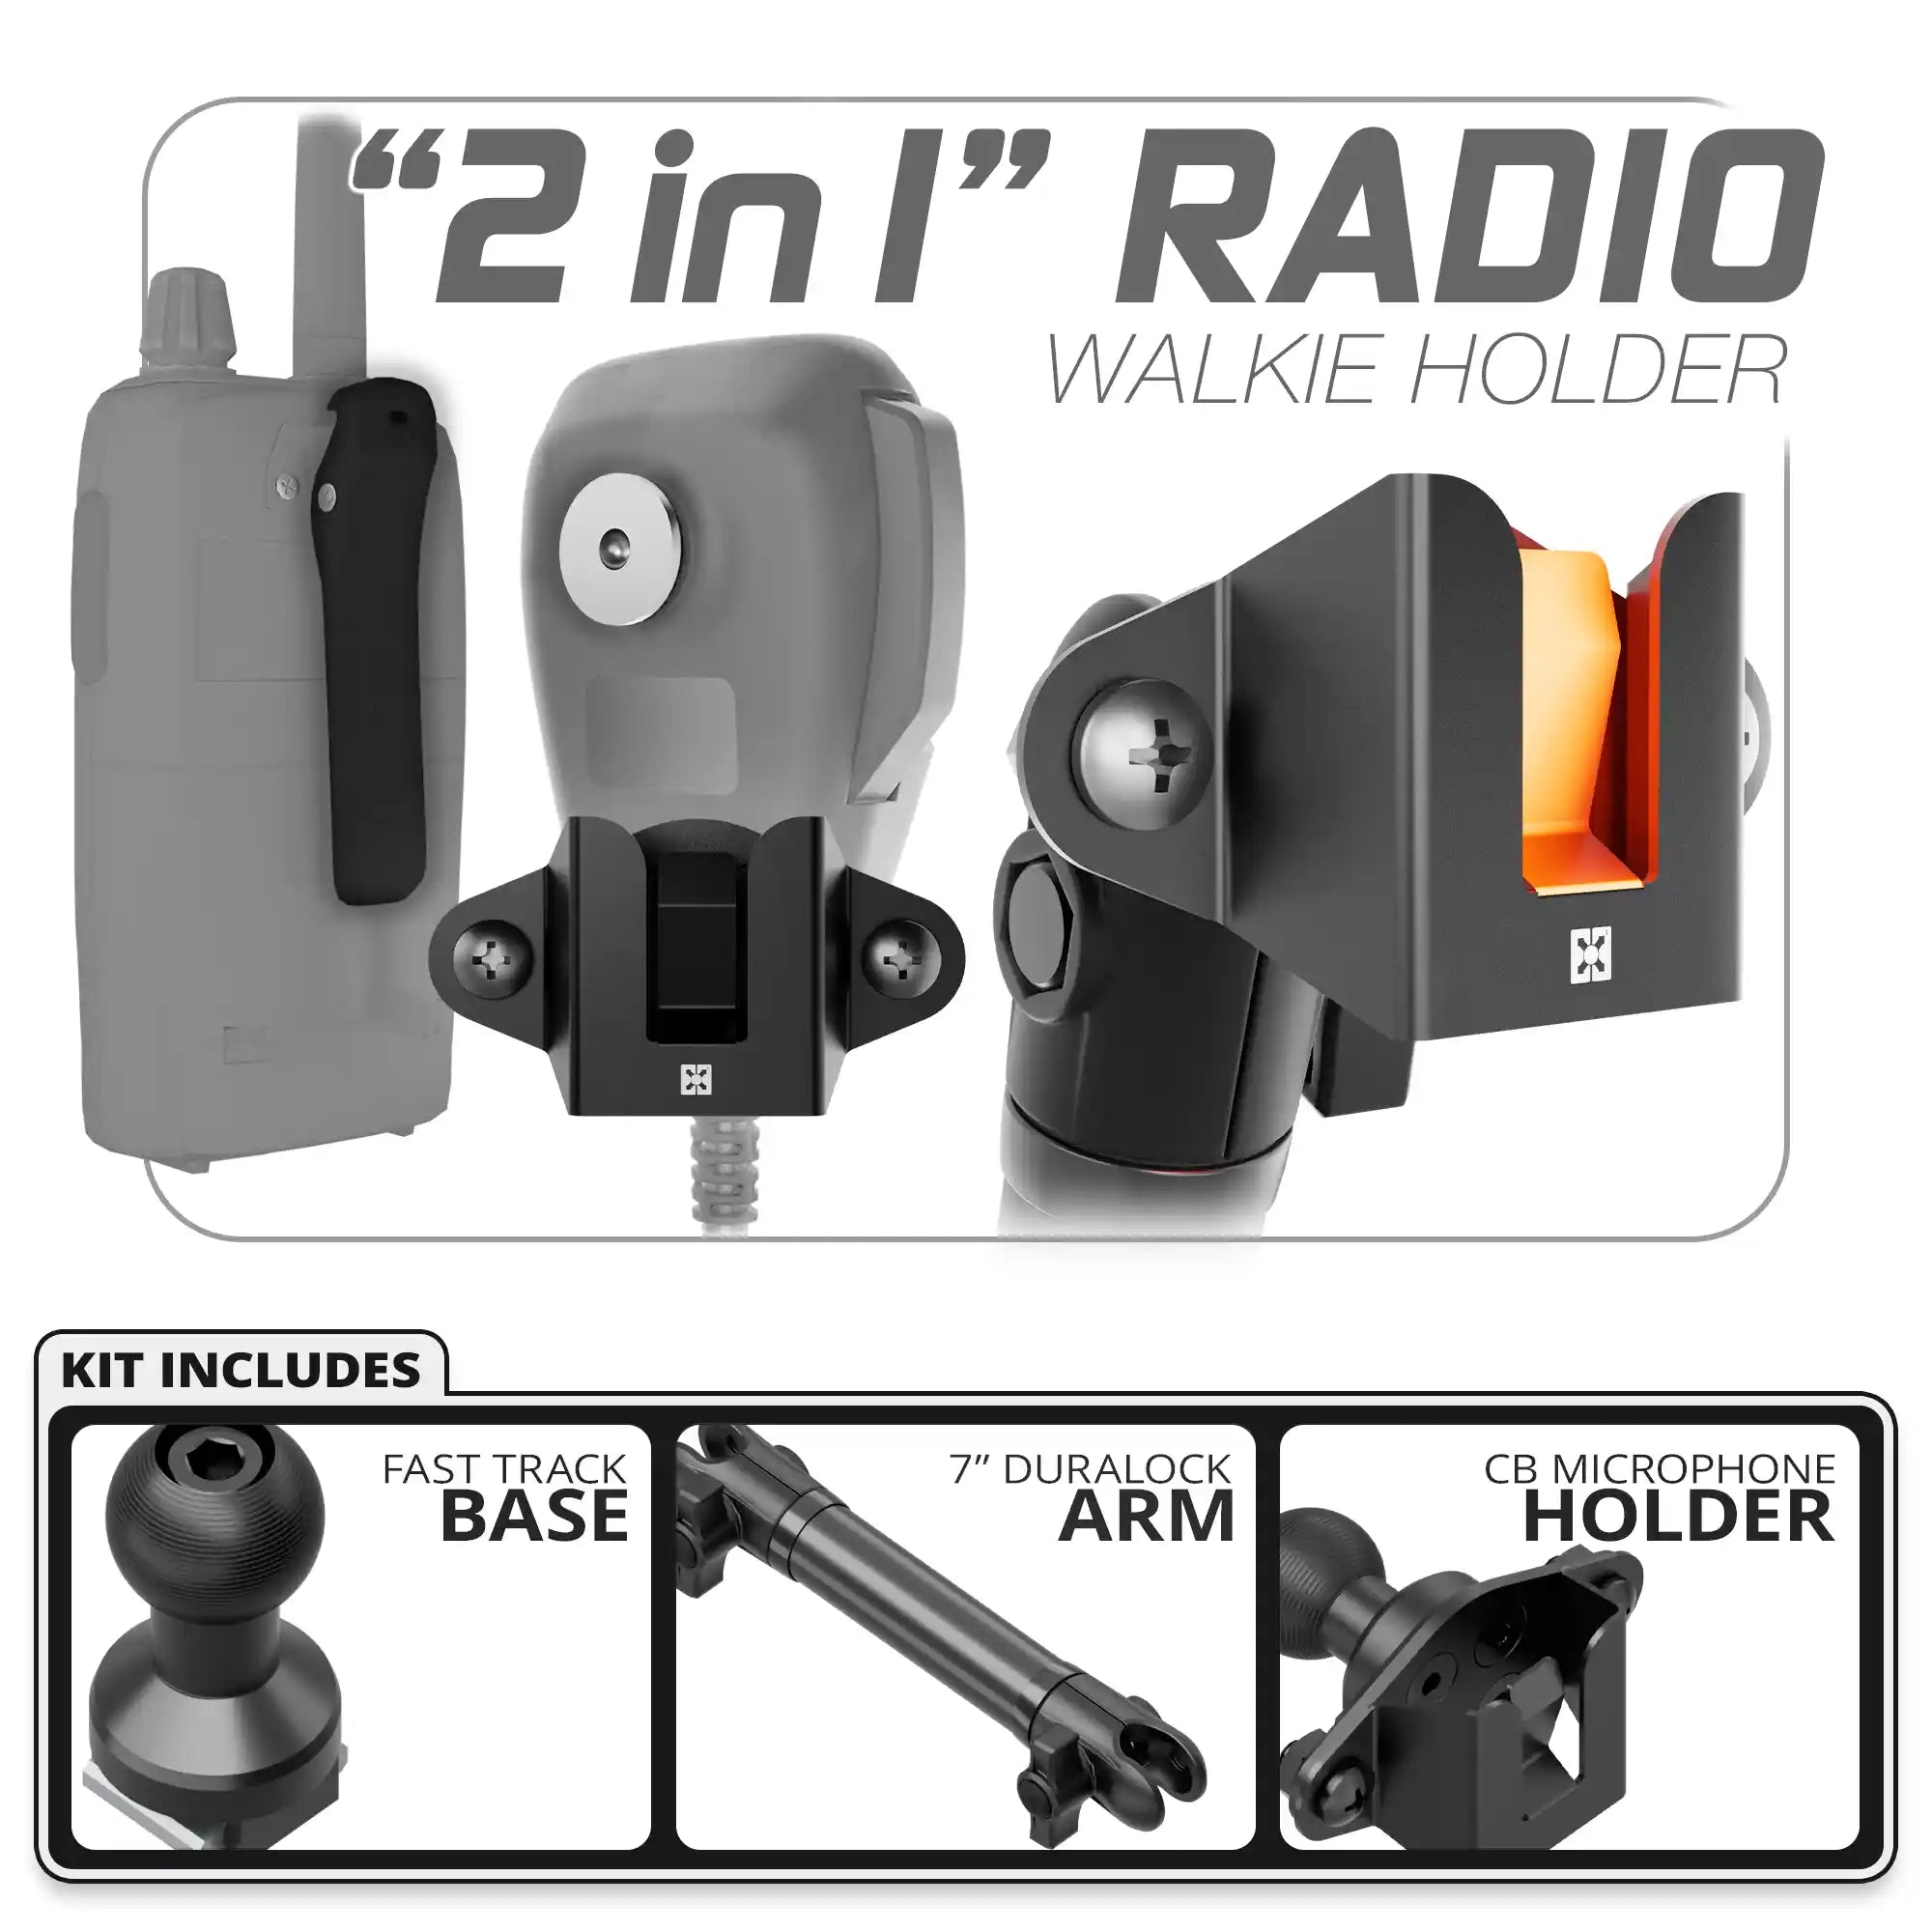 CB Radio/Microphone Holder | Fast Track Base | 7" DuraLock Arm